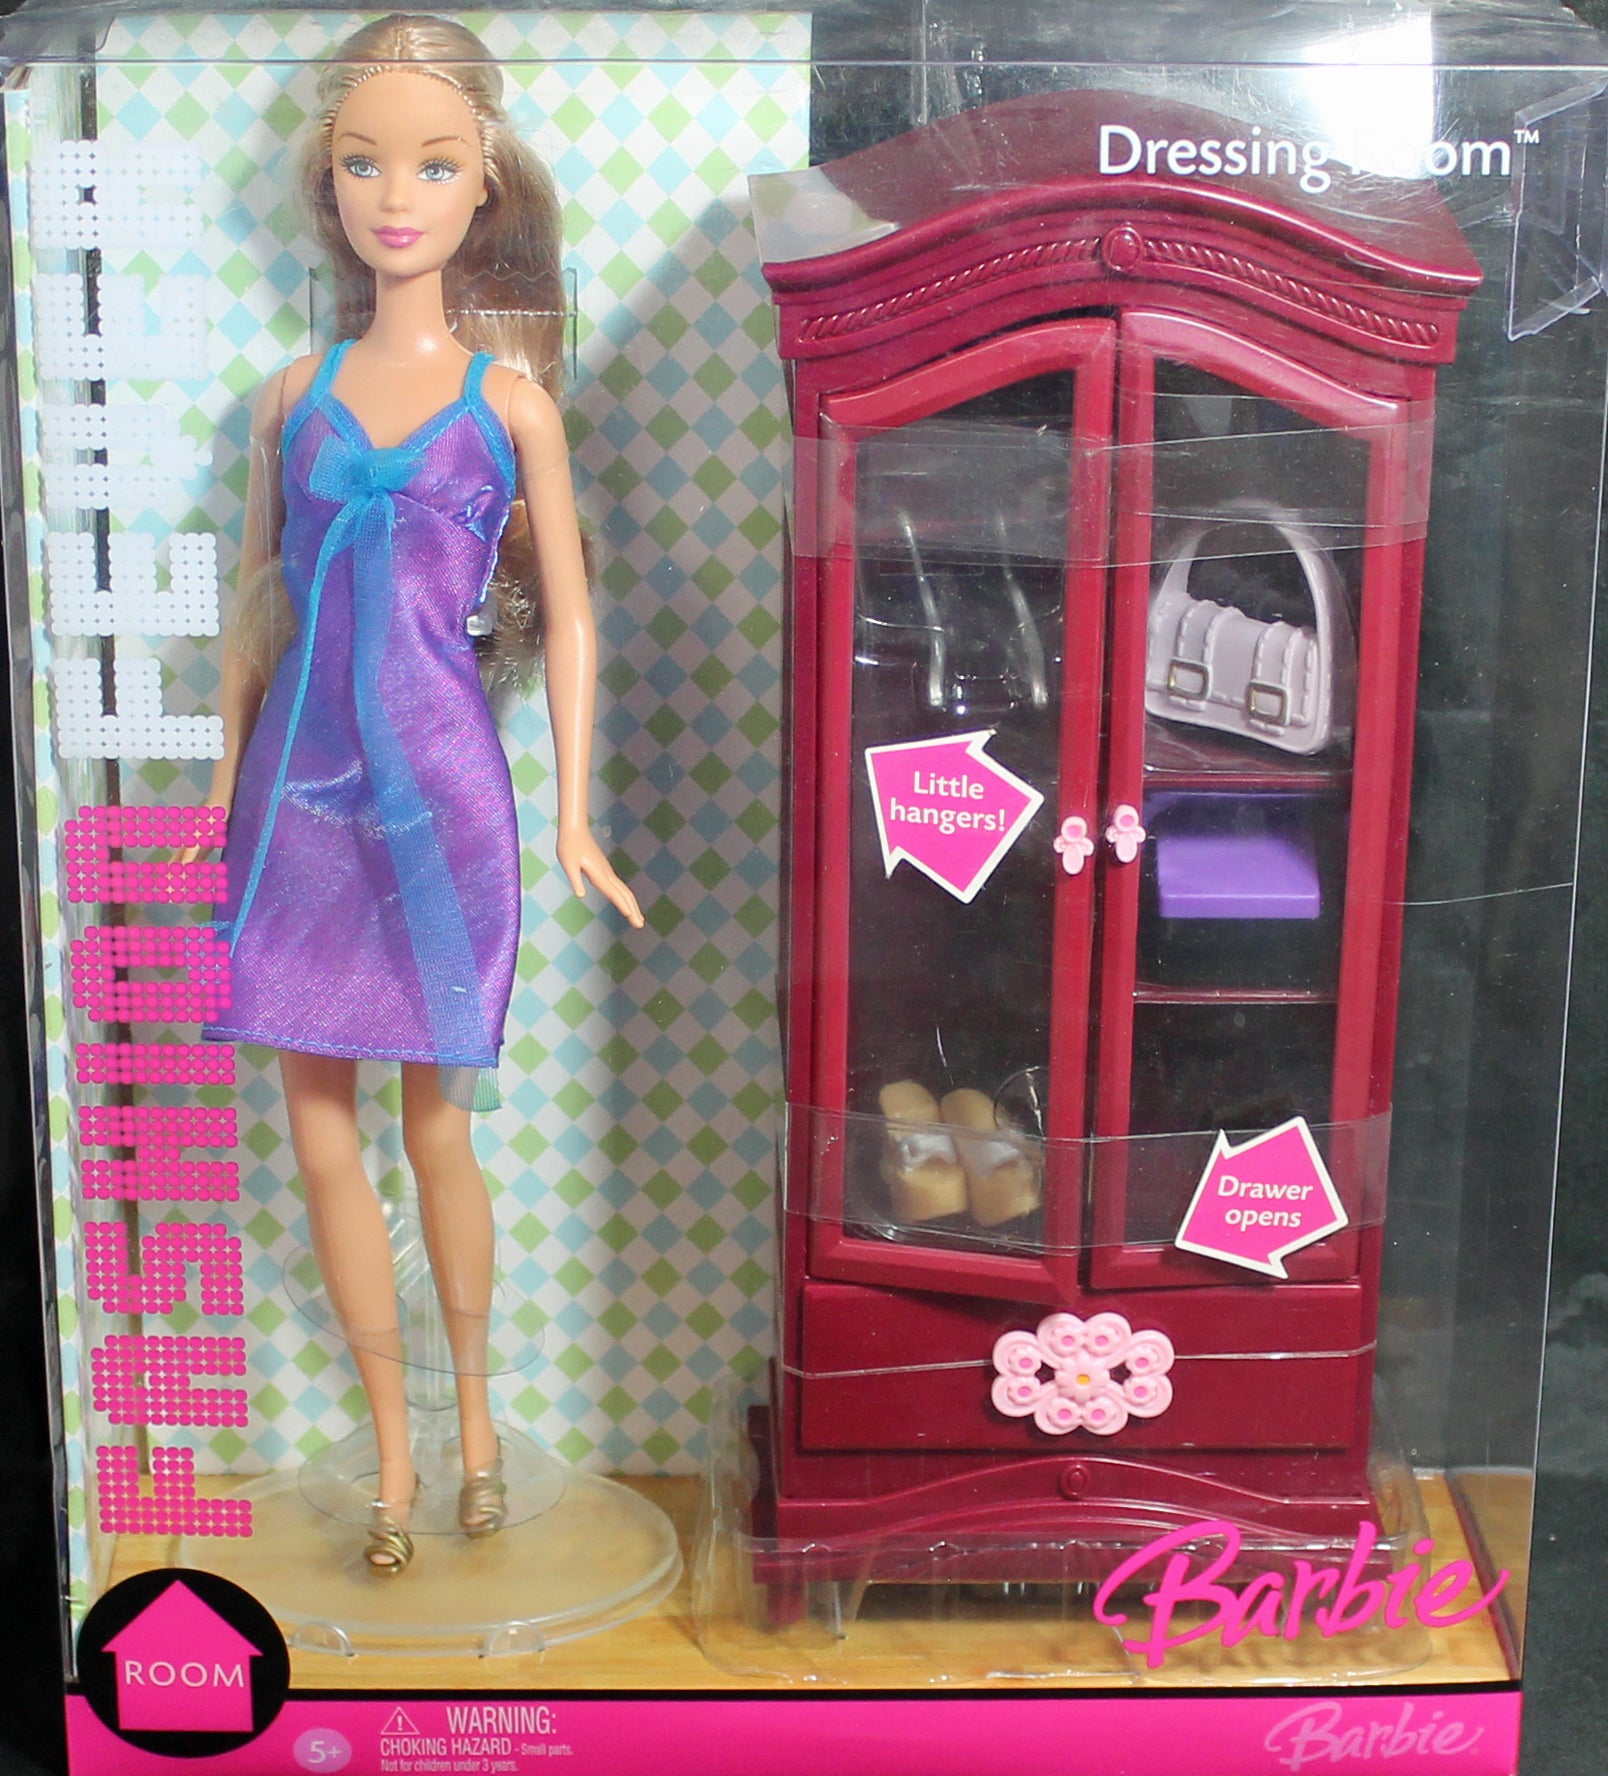 dressing barbie